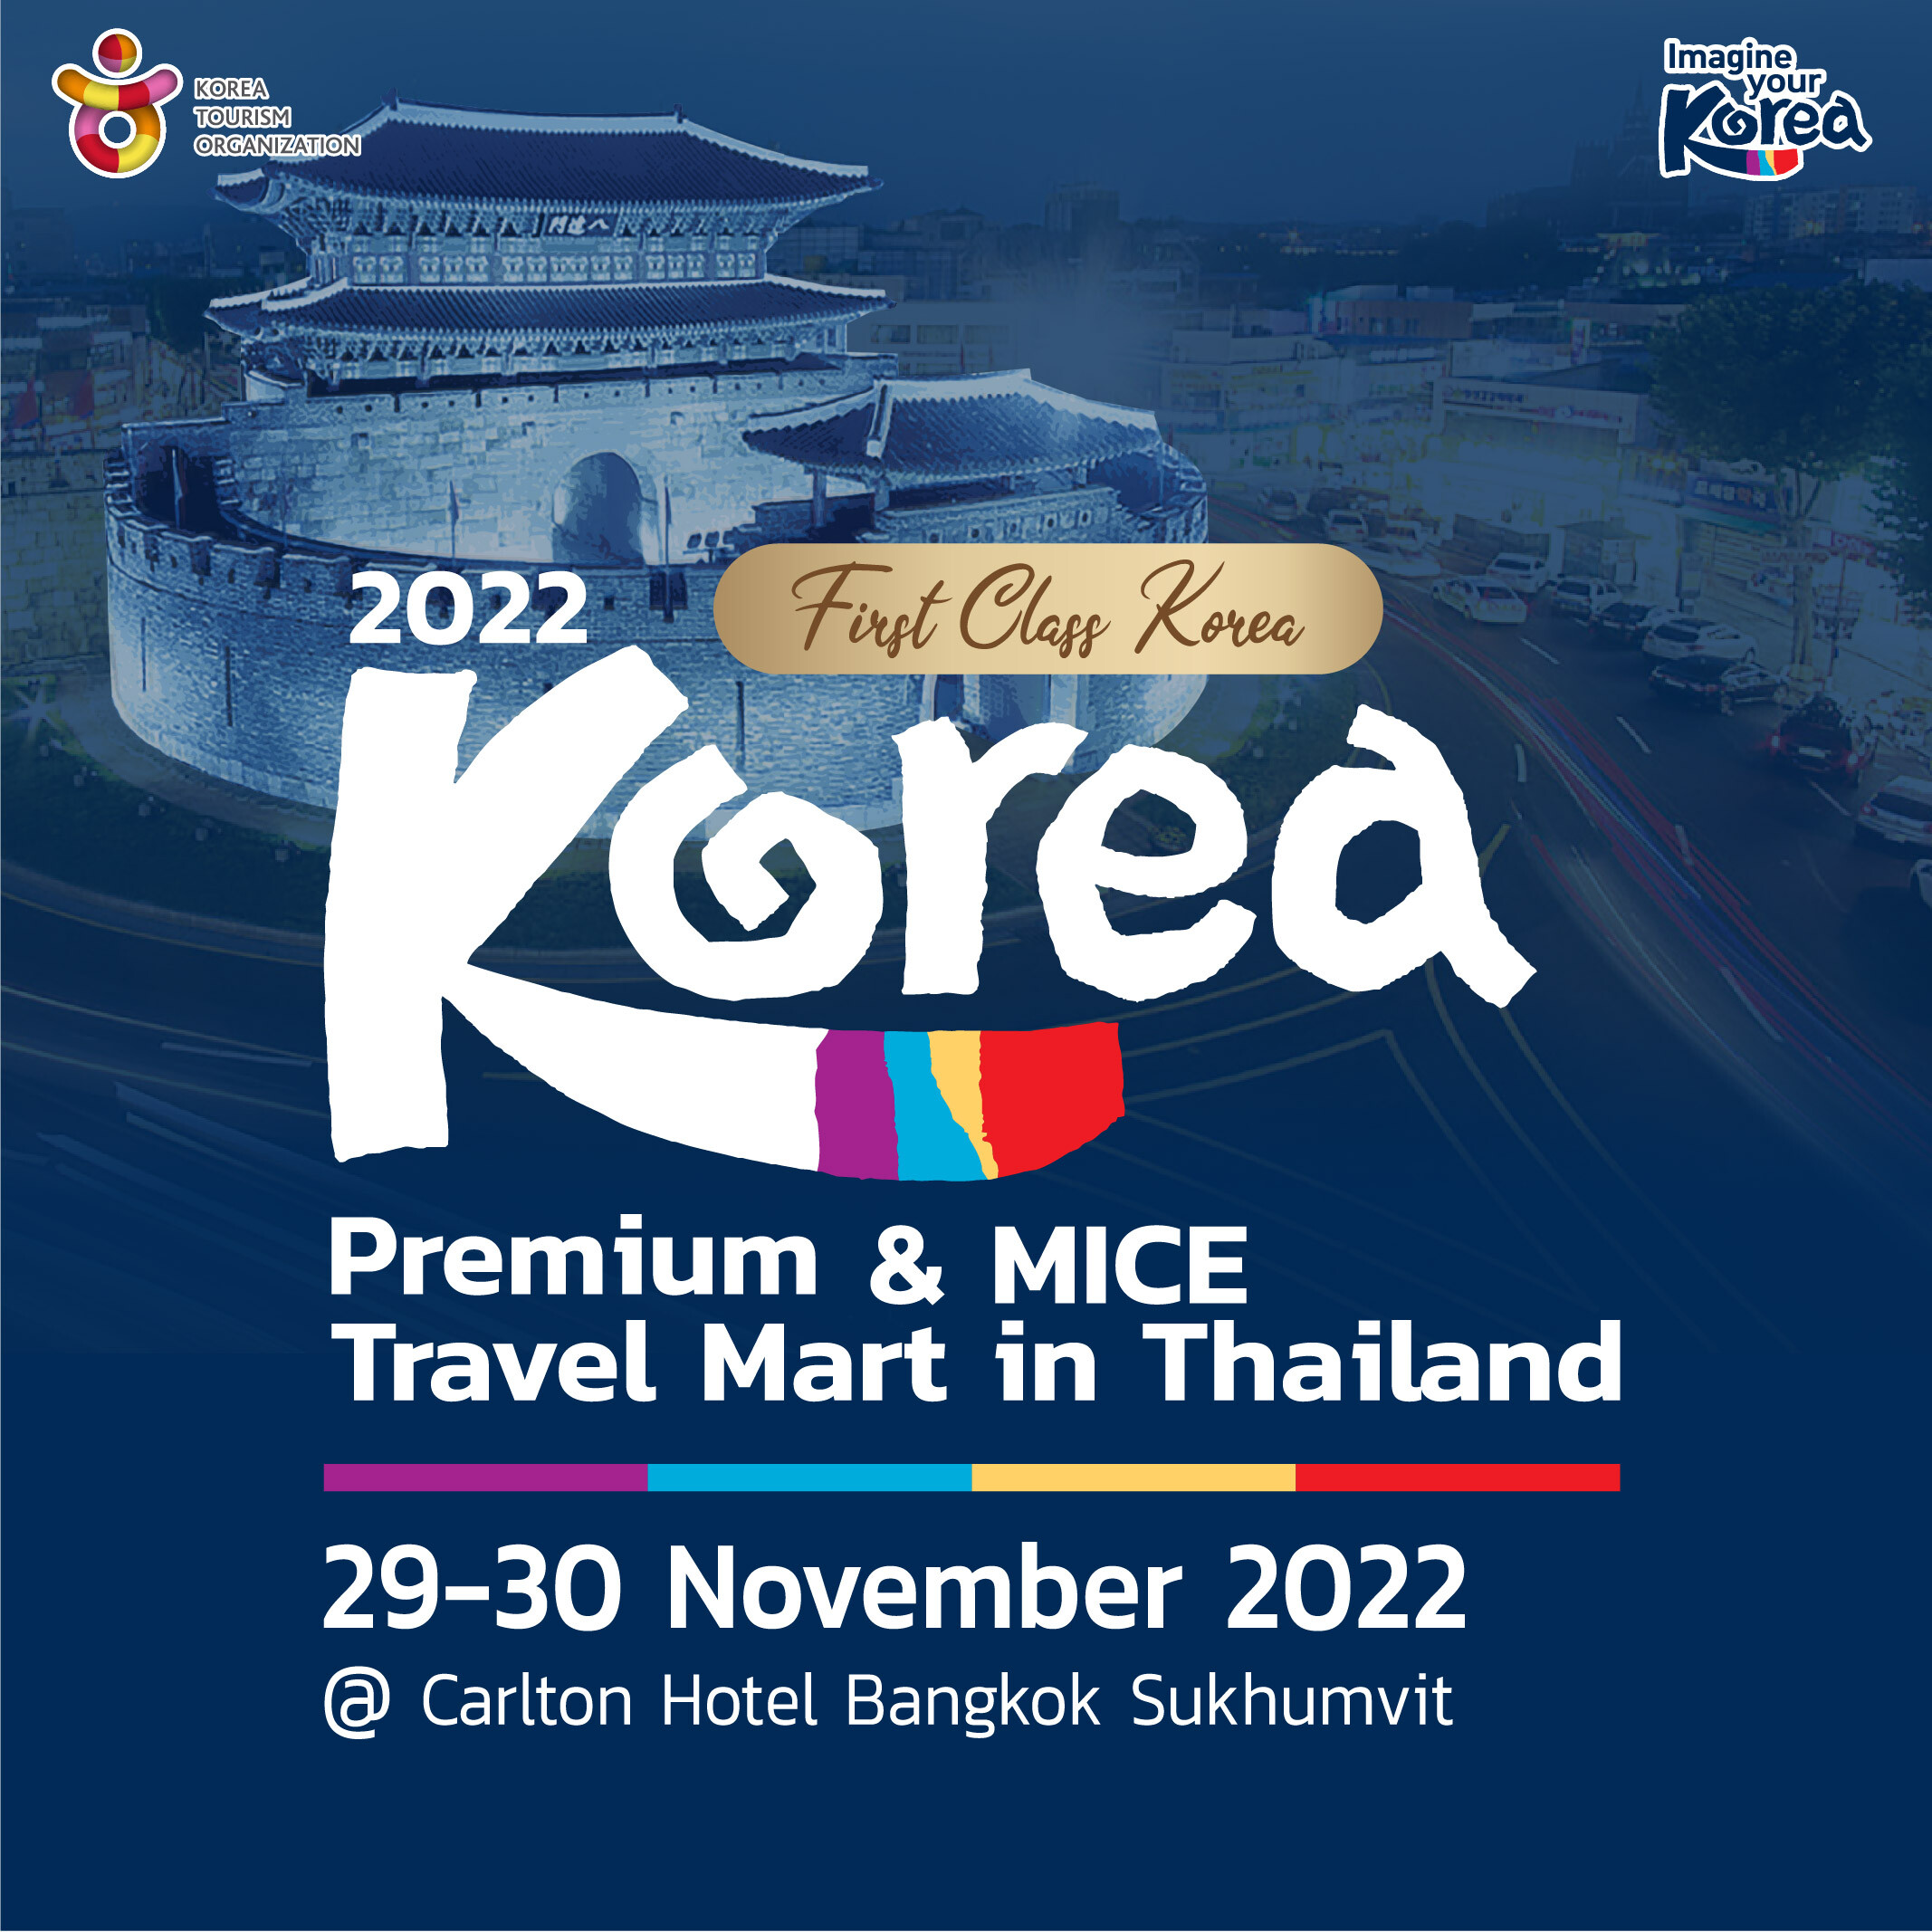 KTO จัดงาน "Premium &amp; MICE Travel Mart in Thailand 2022-First Class Korea" 29-30 พฤศจิกายนนี้ ณ โรงแรมคาร์ลตัน กรุงเทพฯ สุขุมวิท